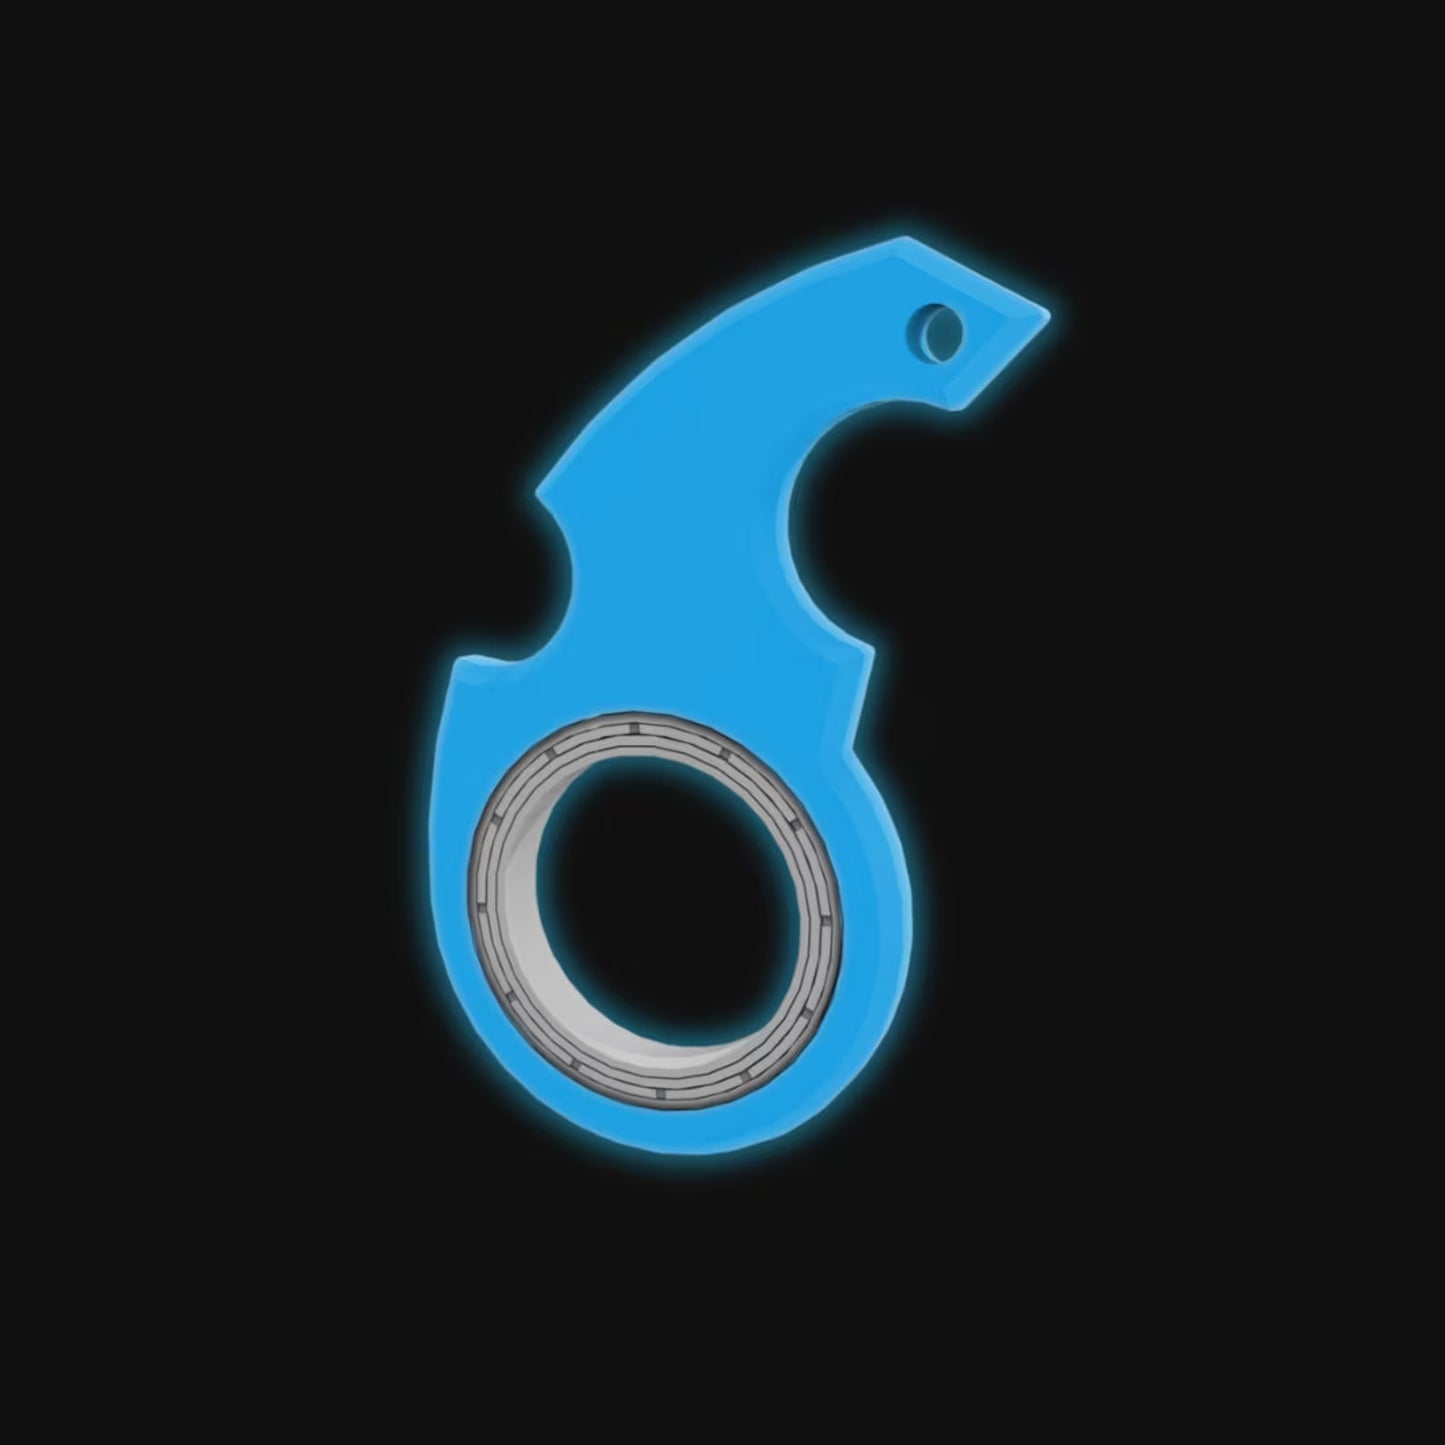 The NinjaSpinner Keychain